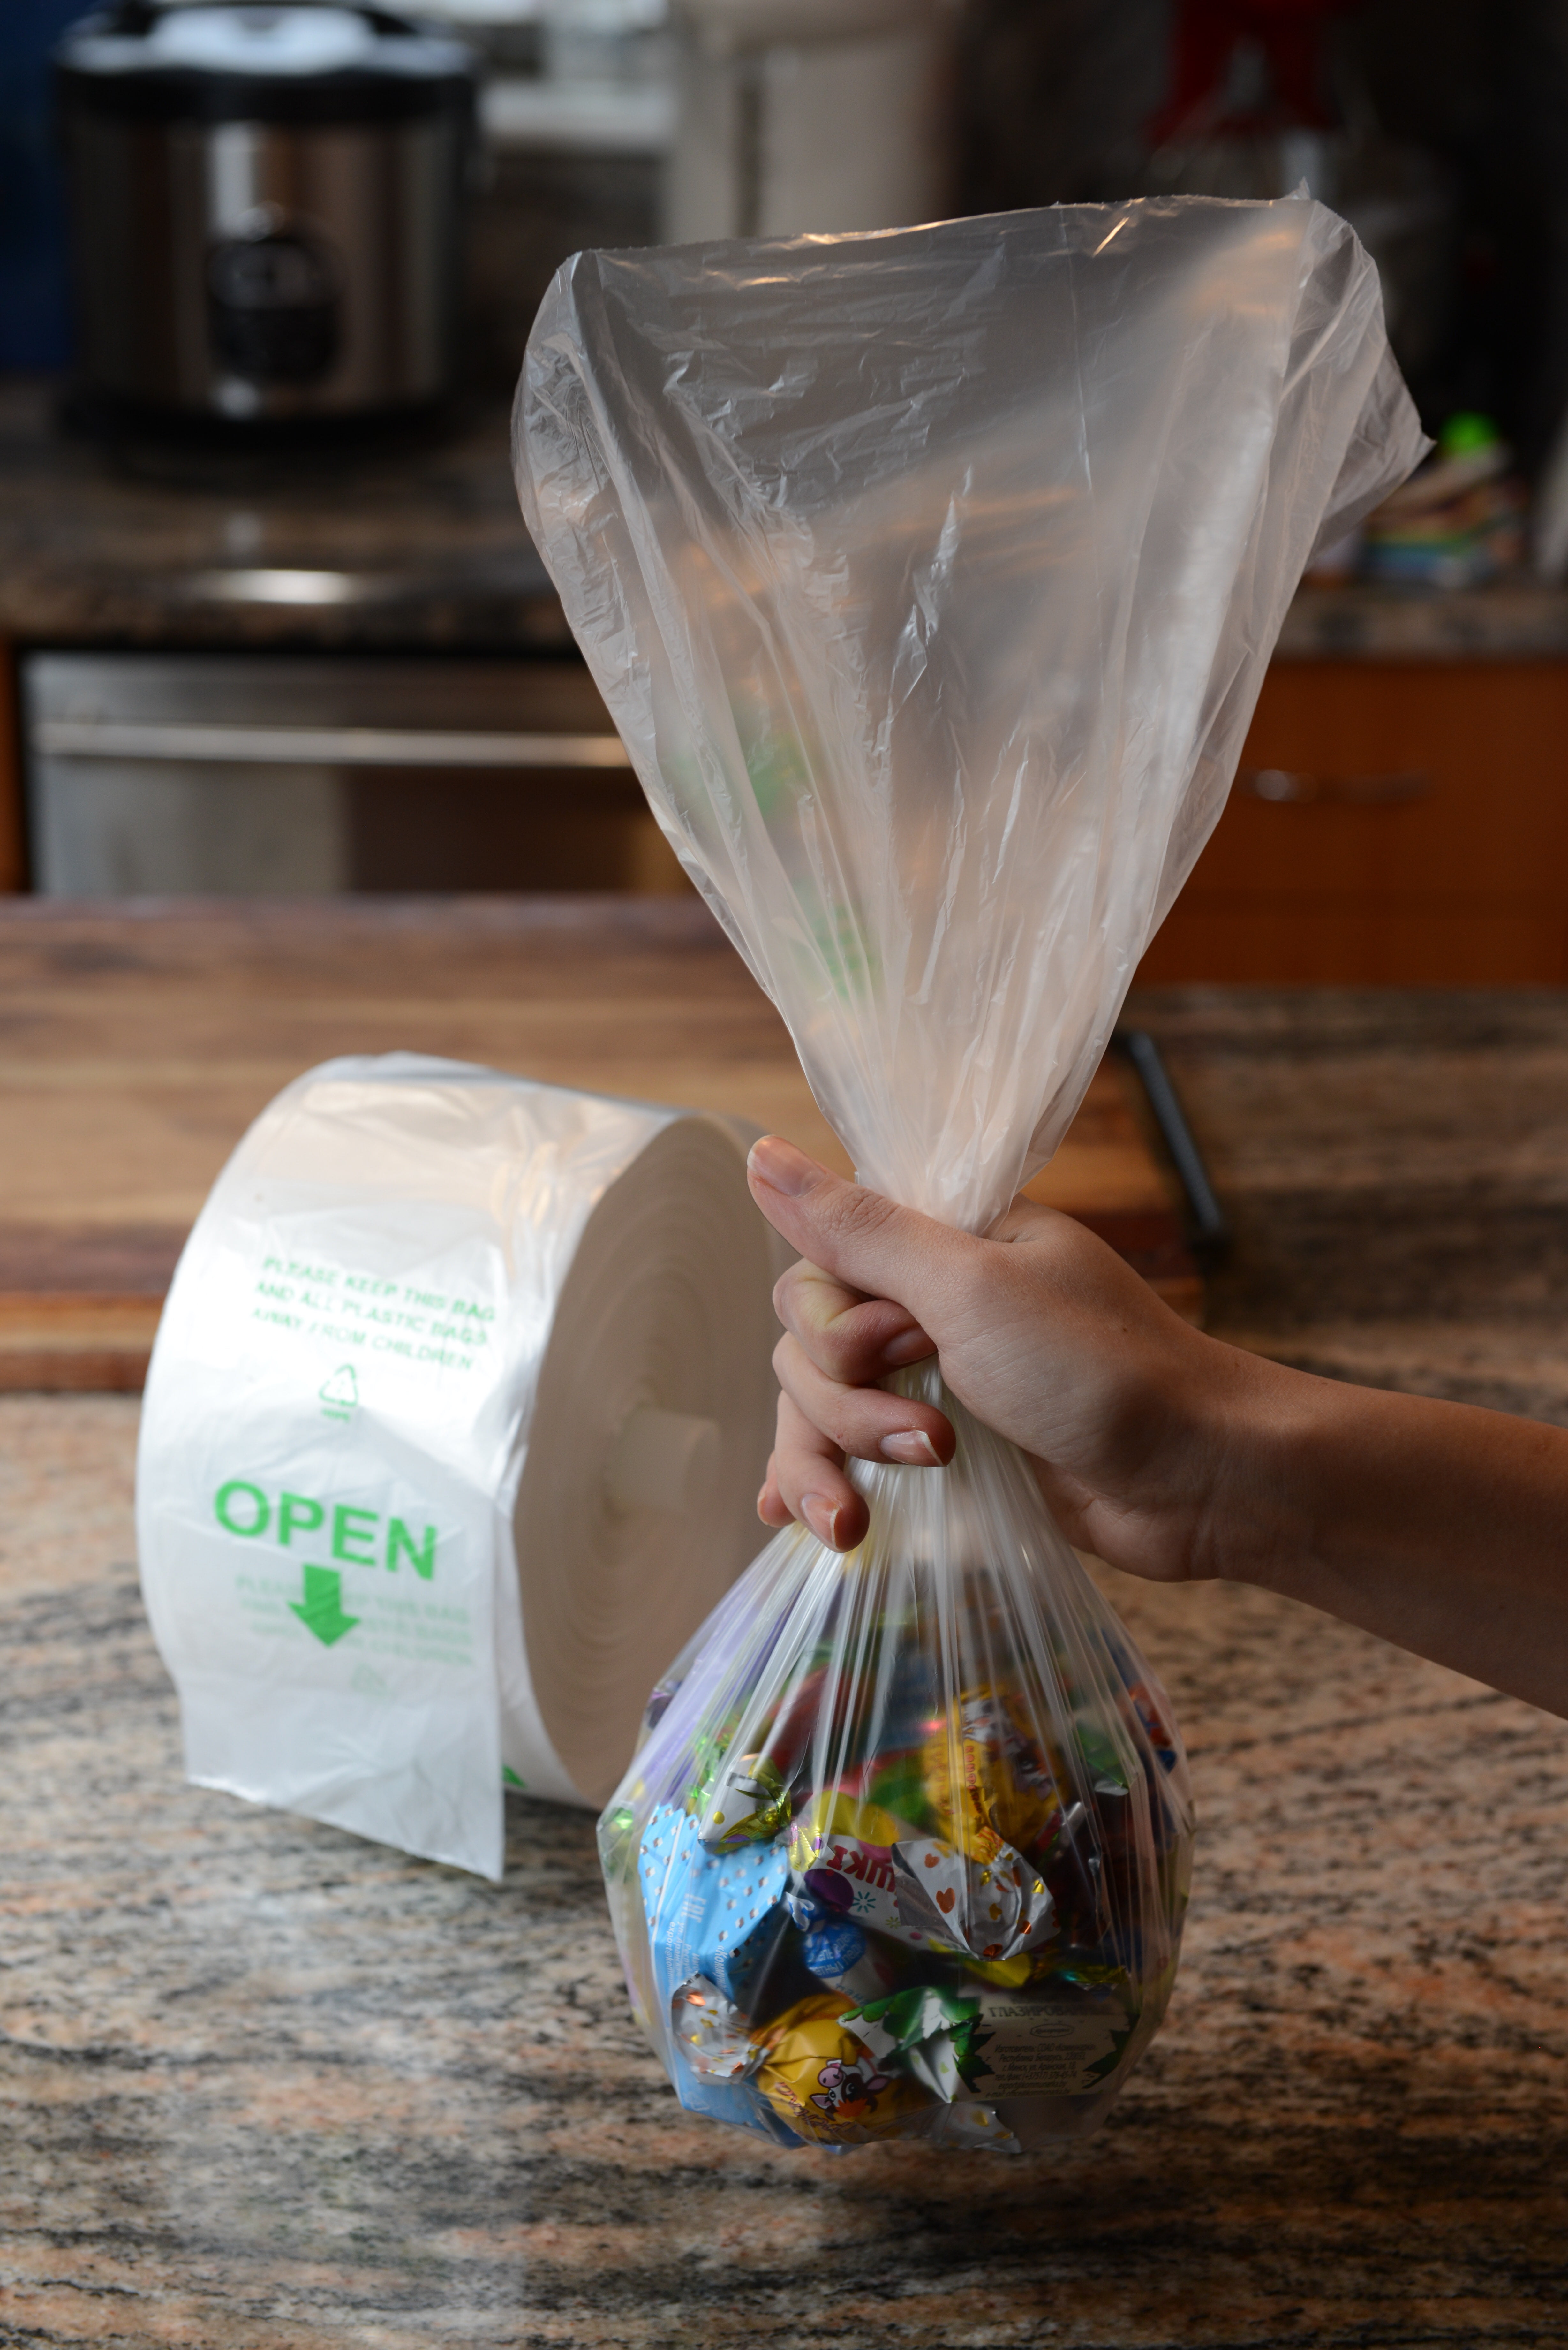 SJPACK Food Storage Bags, 12 x 20 Plastic Produce Bag on a Roll Fruits